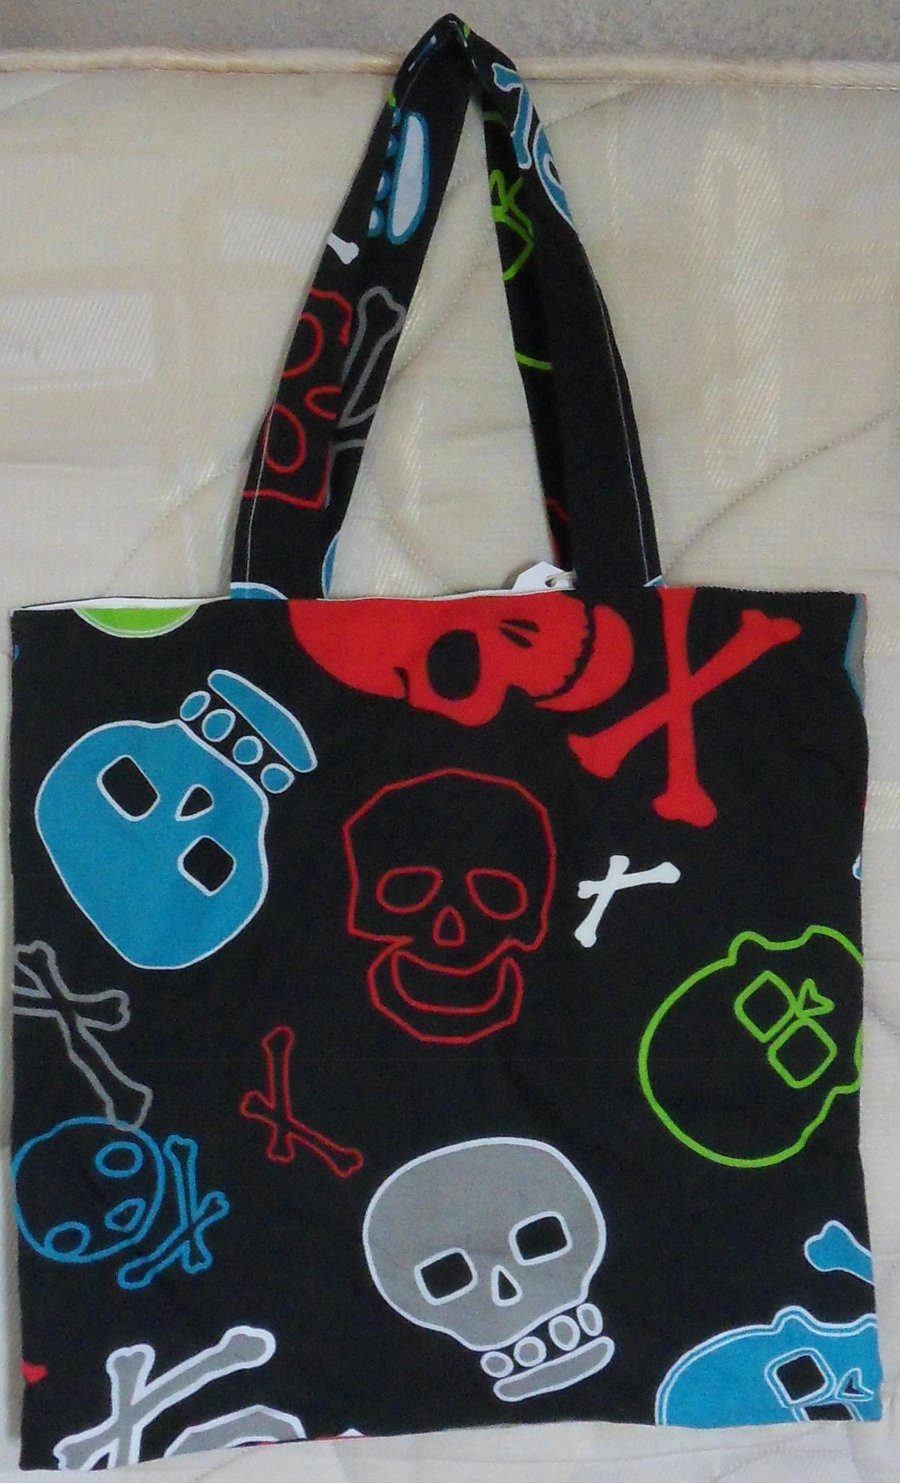 Homemade tote bag.  Skull and crossbones design. 16" x 16"